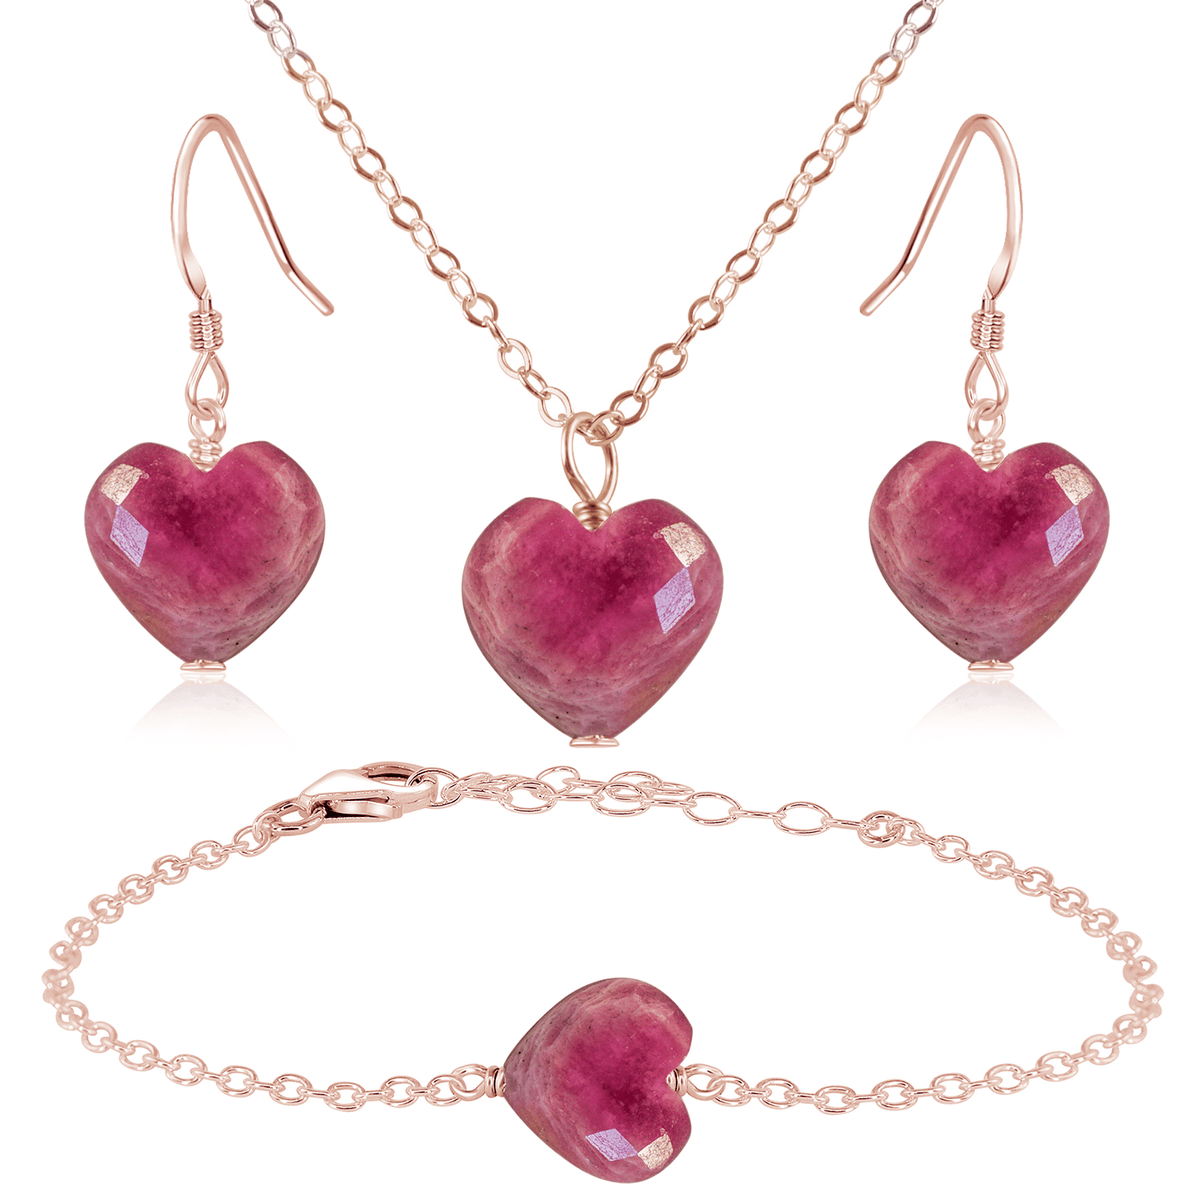 Ruby Crystal Heart Jewellery Set - Ruby Crystal Heart Jewellery Set - 14k Rose Gold Fill / Cable / Necklace & Earrings & Bracelet - Luna Tide Handmade Crystal Jewellery